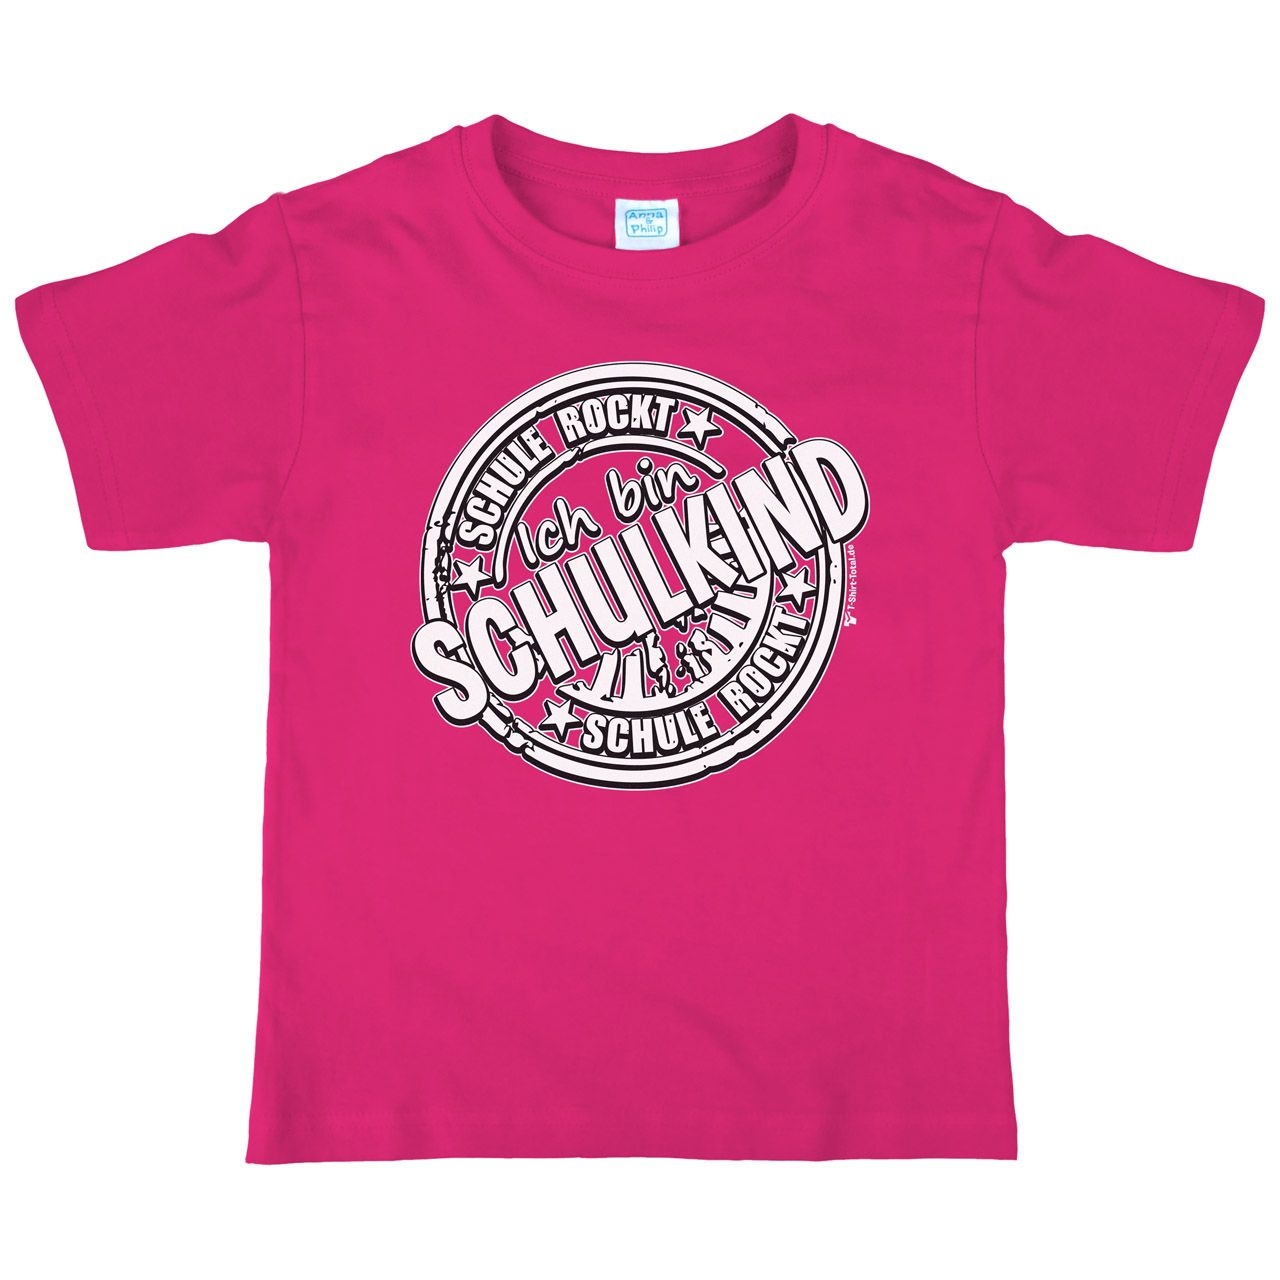 Schule rockt Kinder T-Shirt mit Namen pink 122 / 128